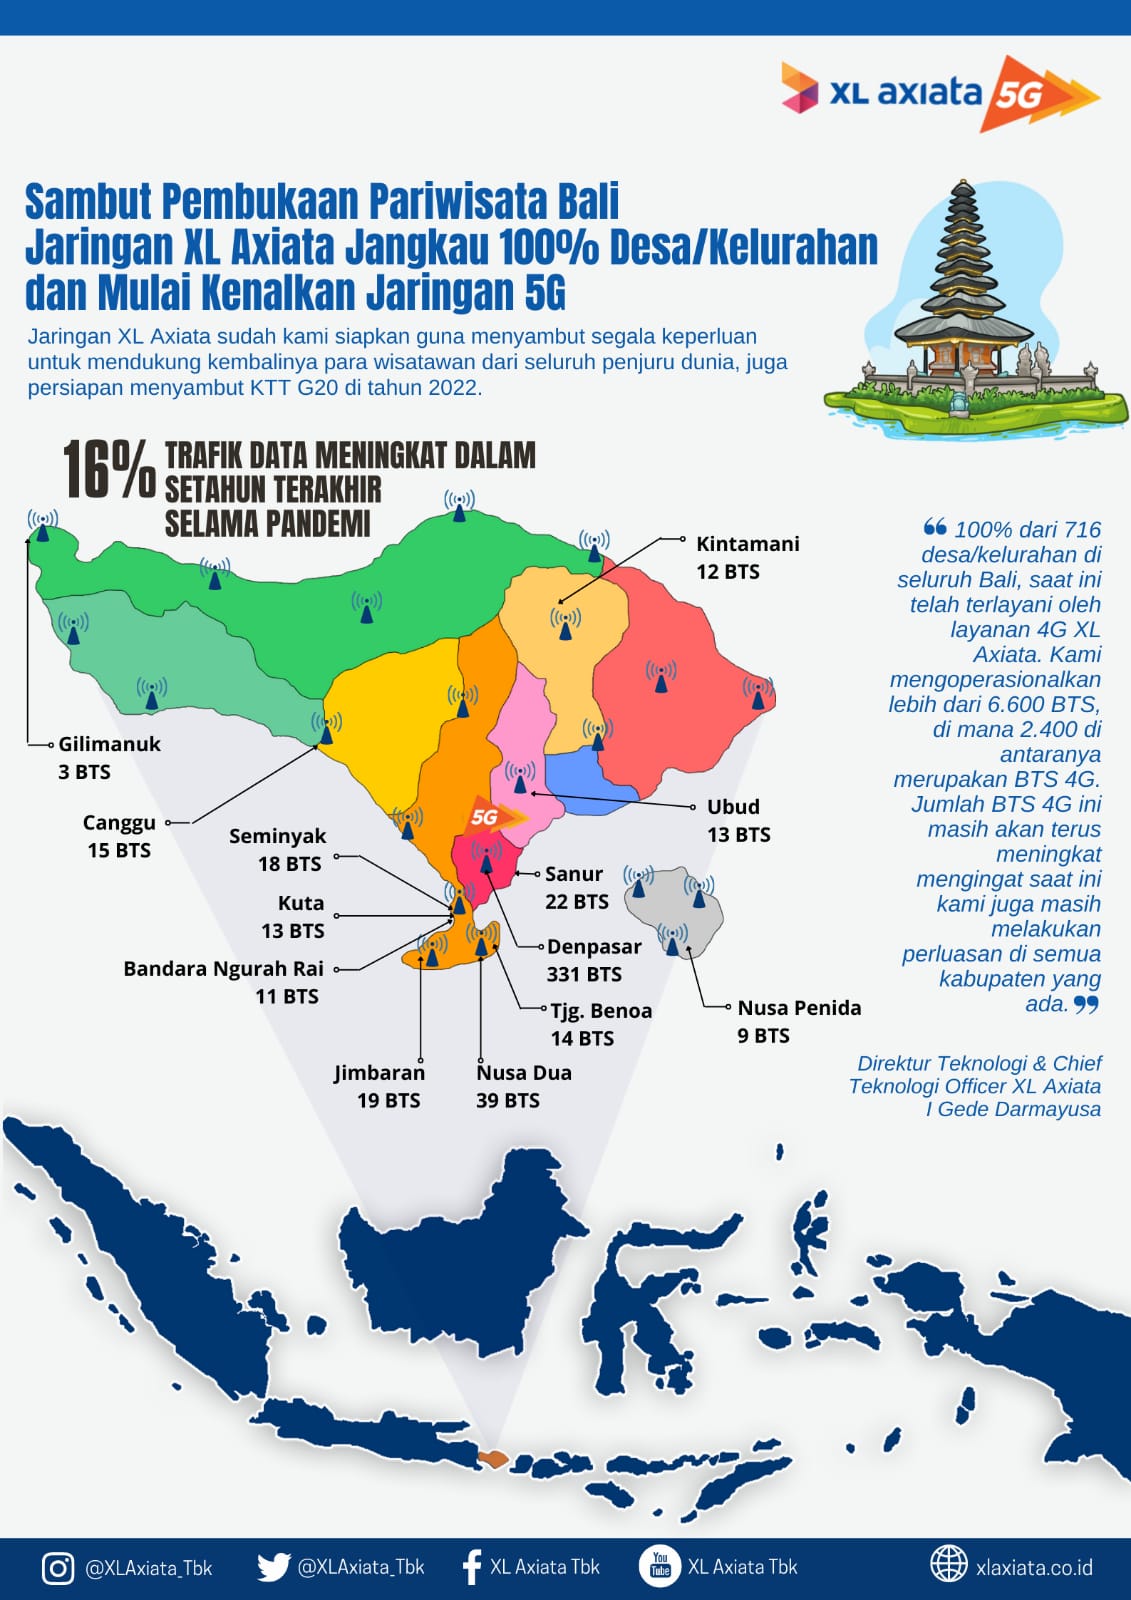 Sambut Pembukaan Pariwisata Bali Jaringan 4G XL Axiata Jangkau 100%